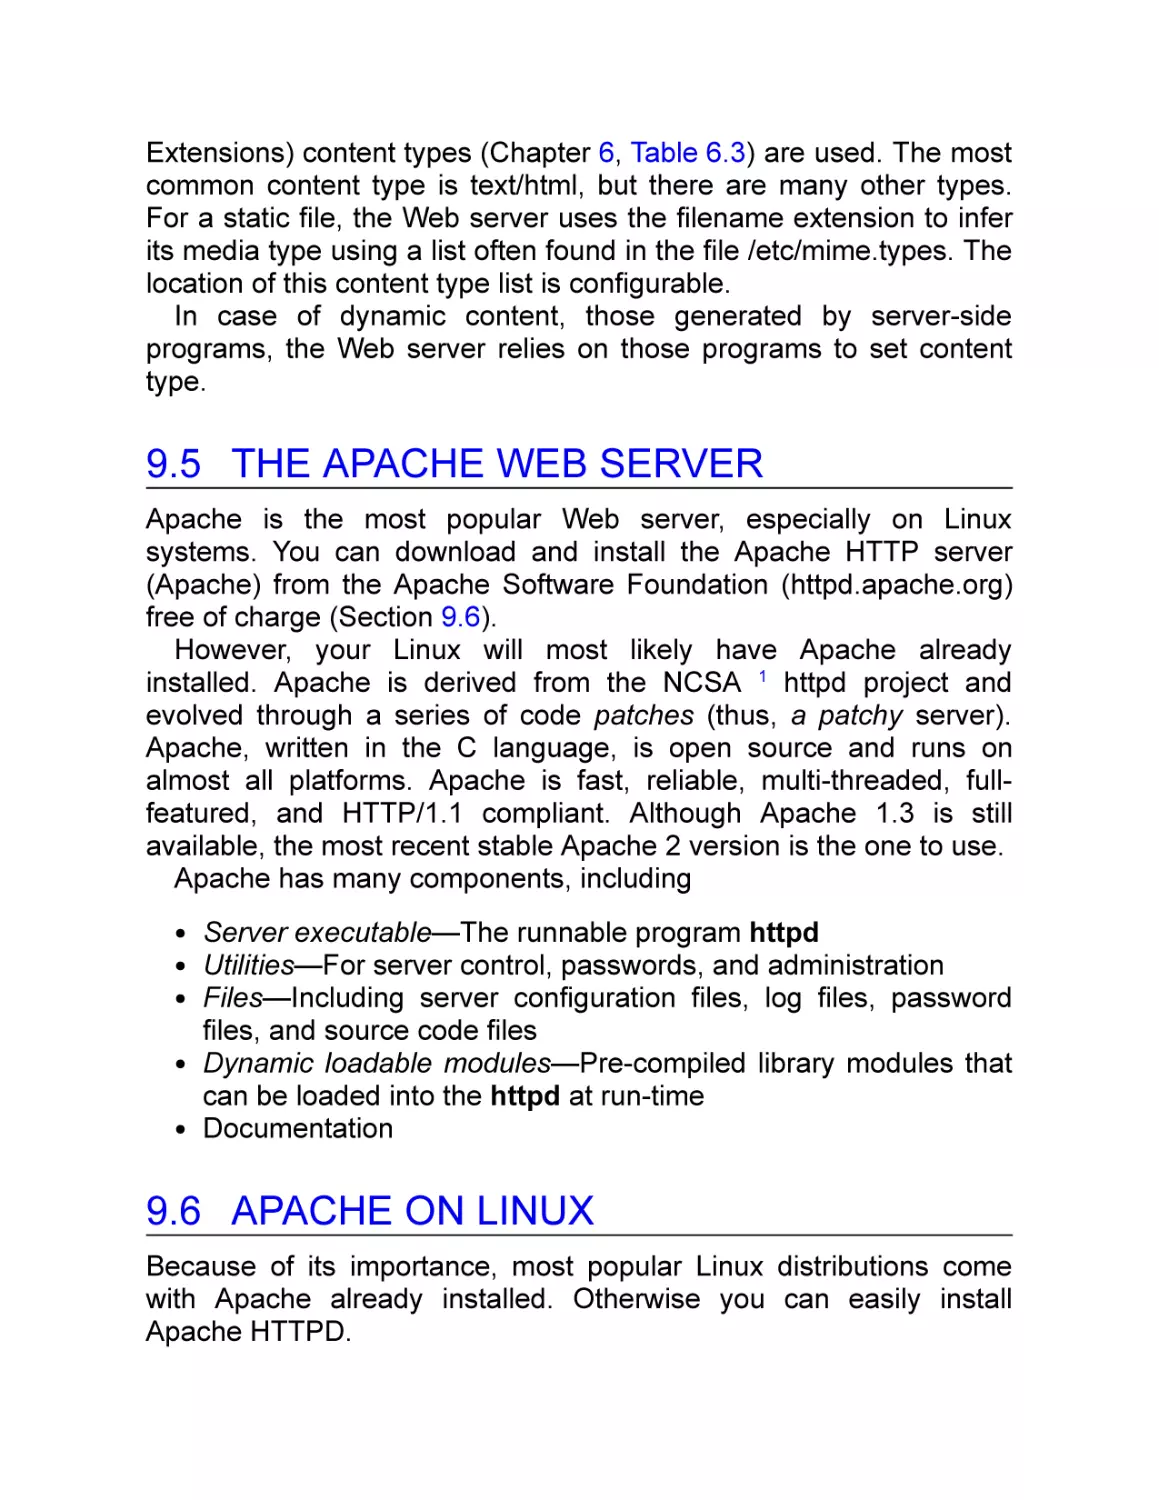 9.5 The Apache Web Server
9.6 Apache on Linux